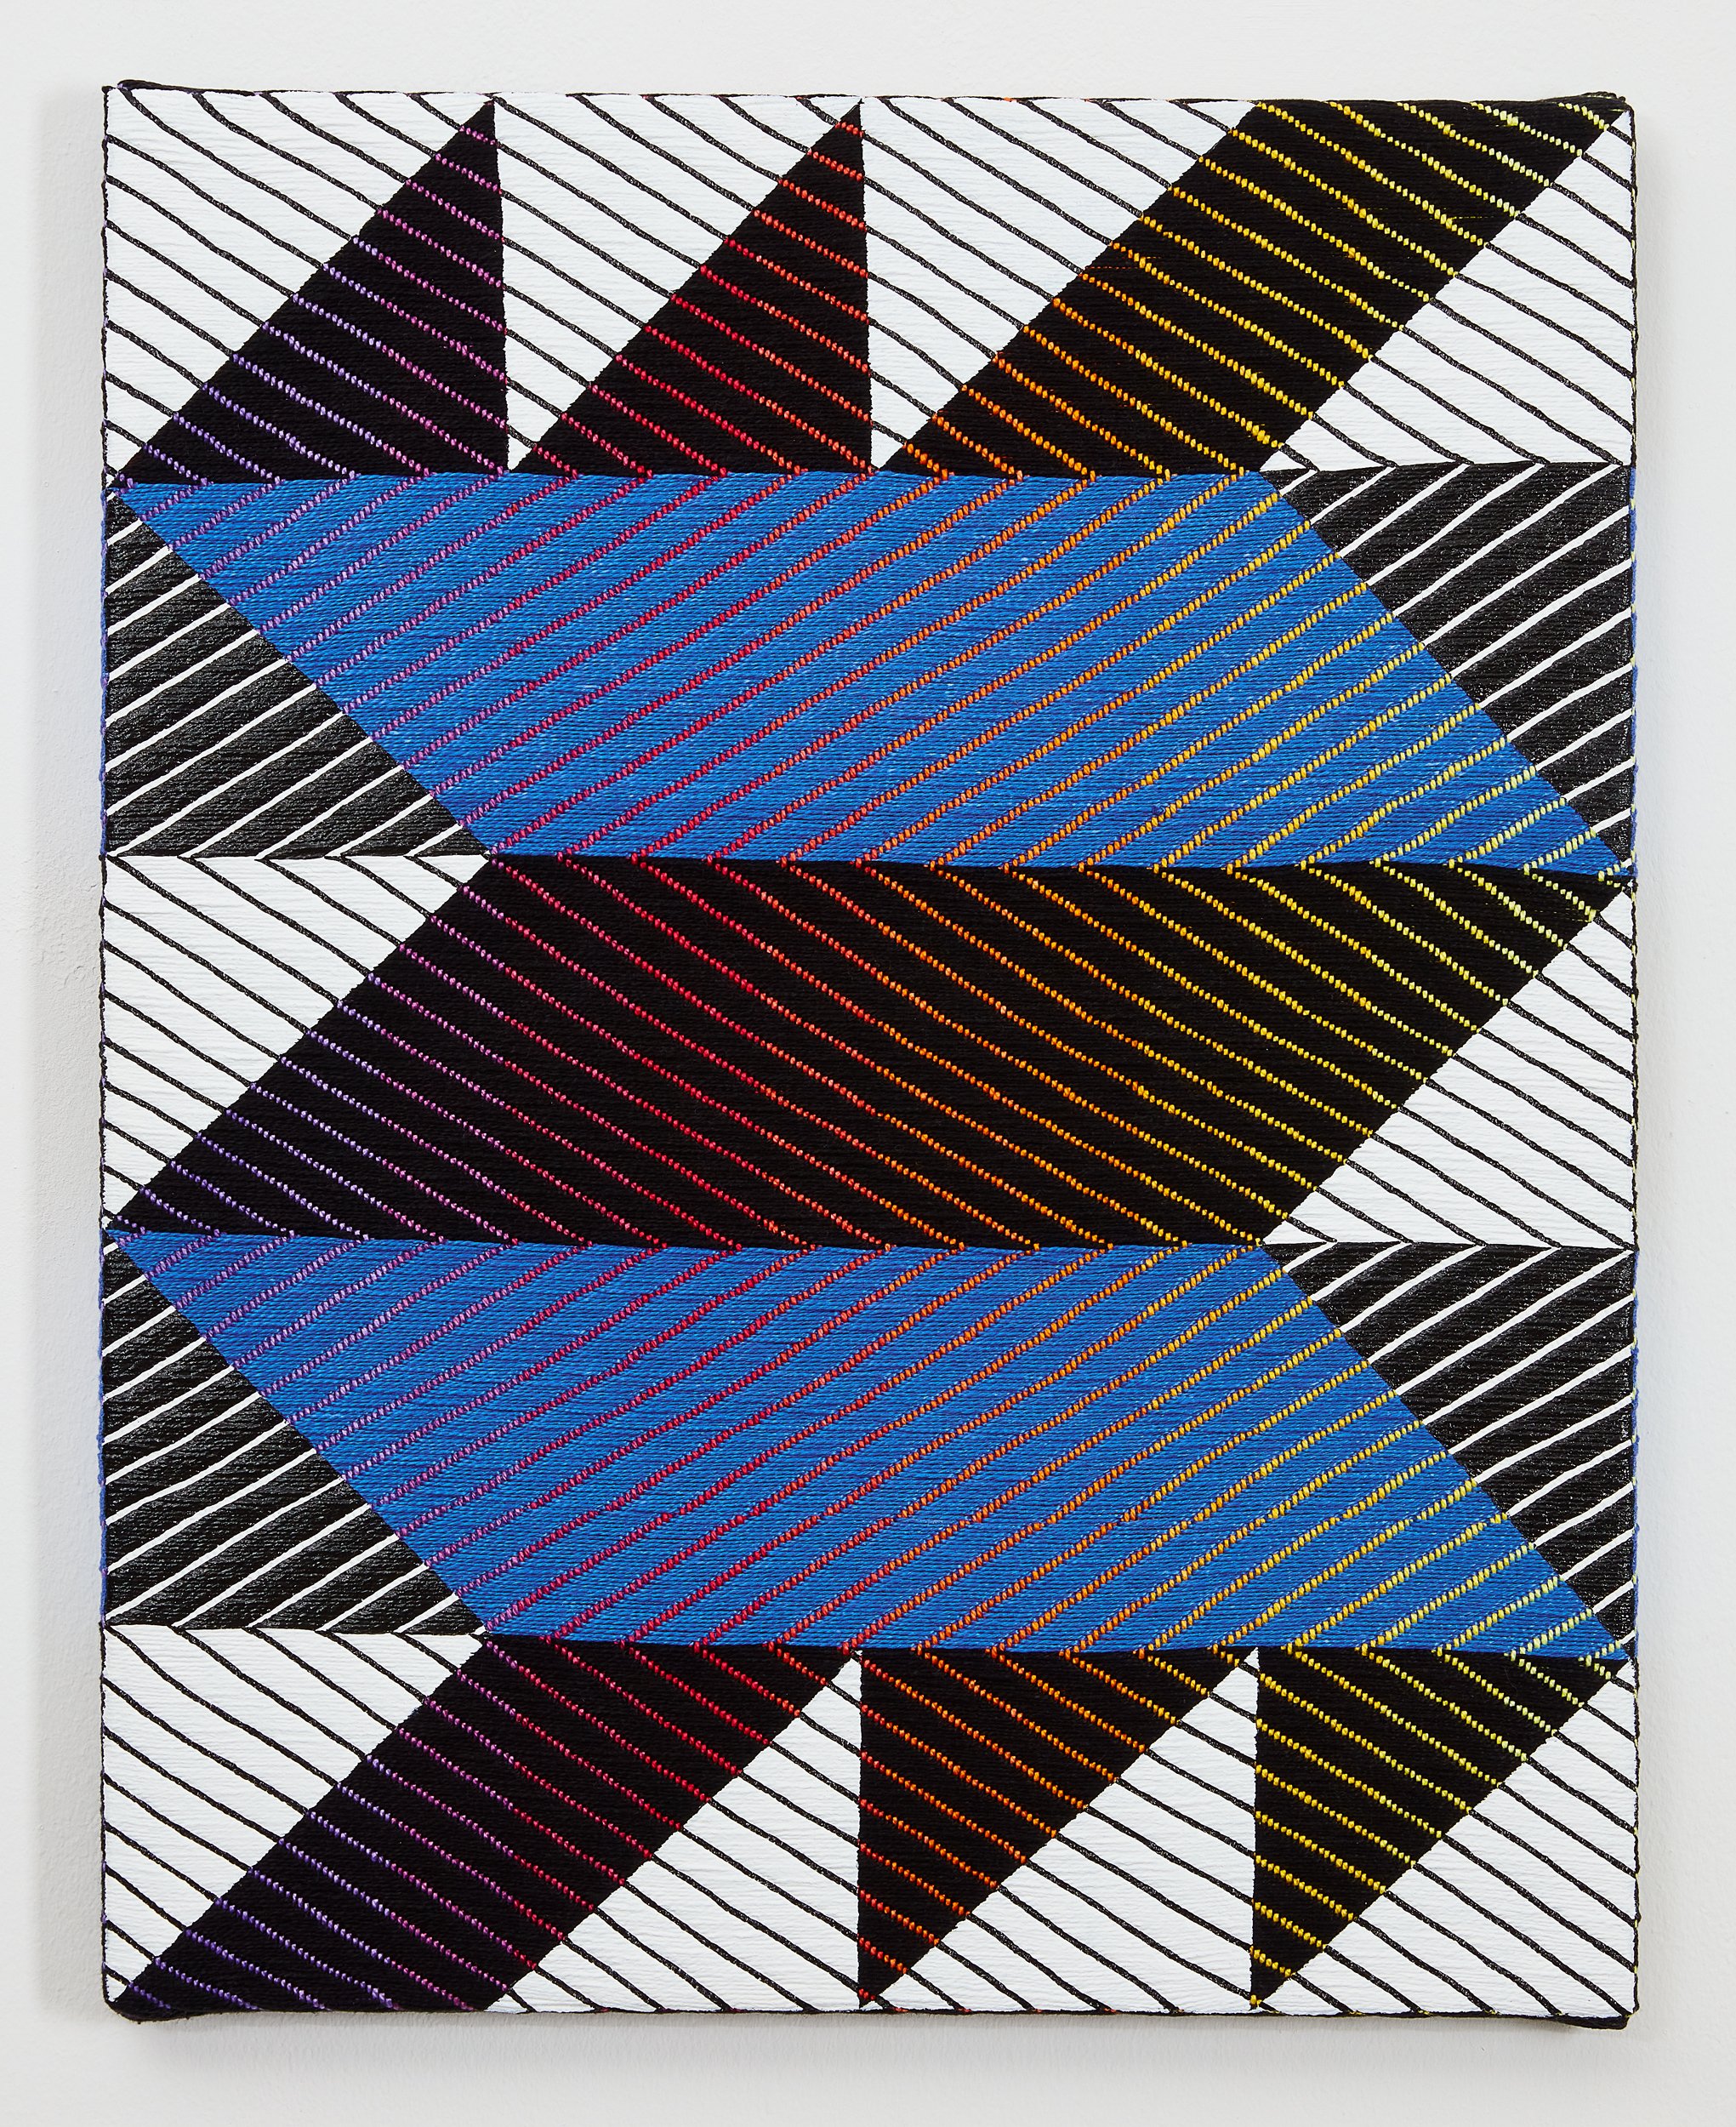 Samantha Bittman, Untitled, 2020, acrylic on hand-women textile, 20 x 16 in, 50.8 x 40.6 cm, (SBi302537) LR